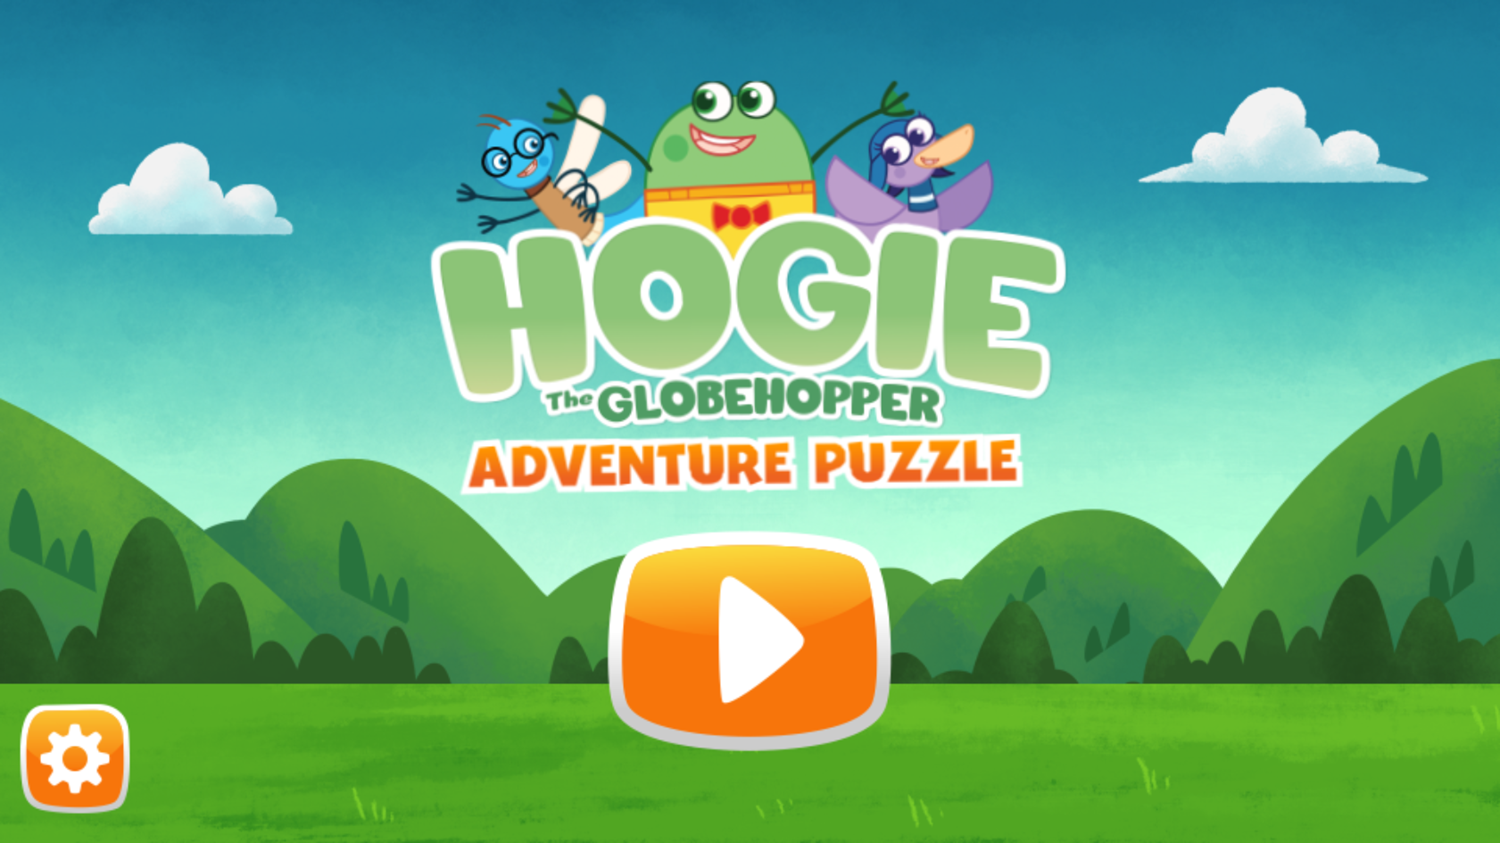 Hogie The Globehopper Adventure Puzzle Game Welcome Screen Screenshot.